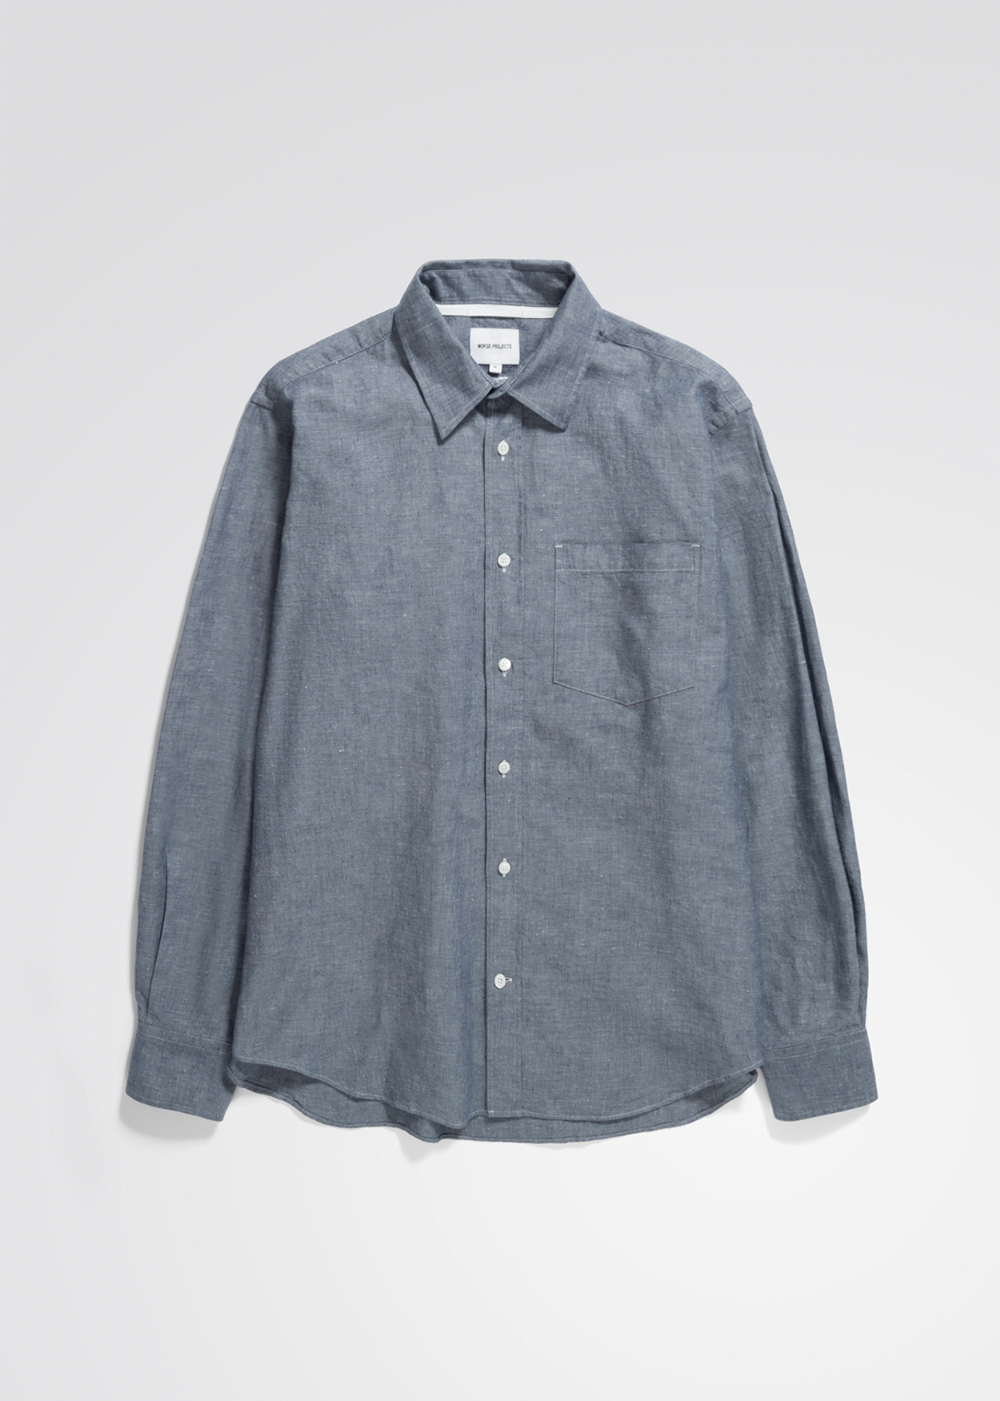 Algot Relaxed Cotton Linen Shirt - Dark Navy - Norse Projects - Danali - N40-0795